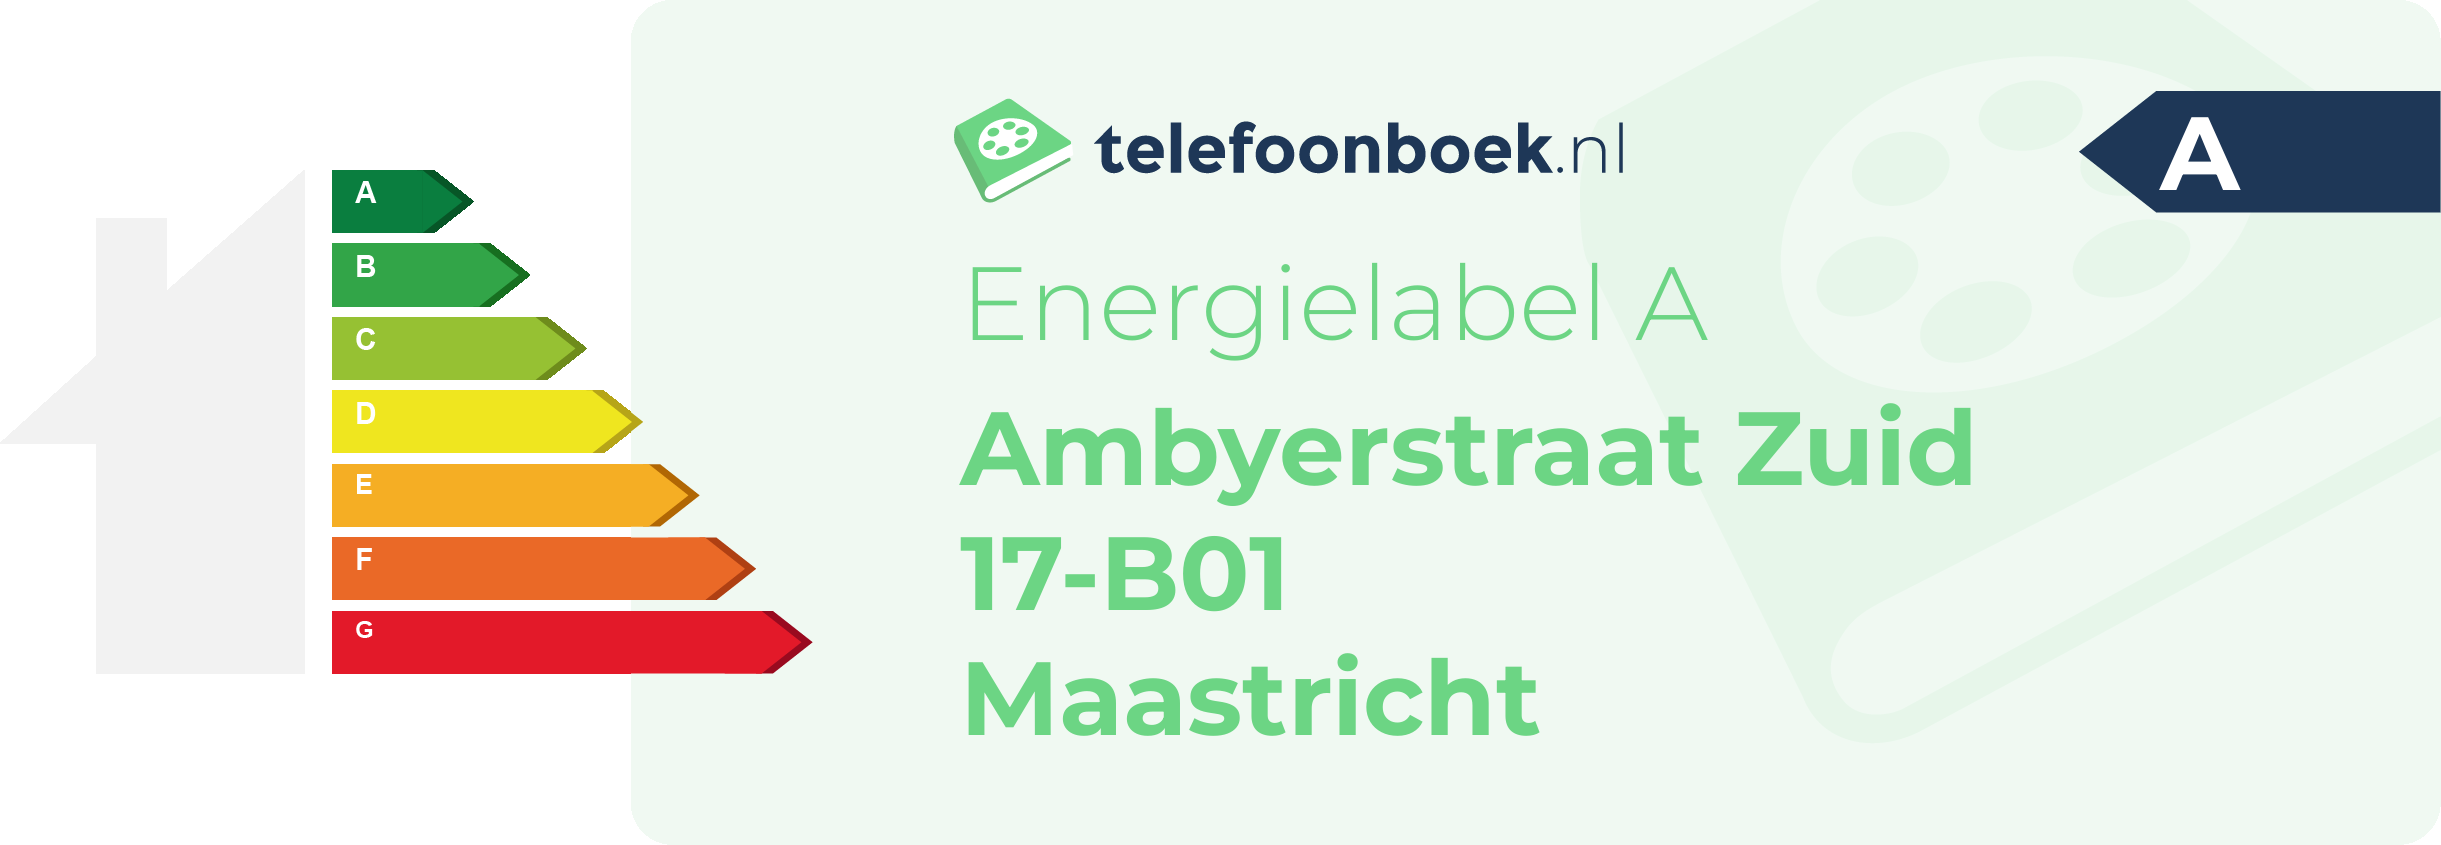 Energielabel Ambyerstraat Zuid 17-B01 Maastricht